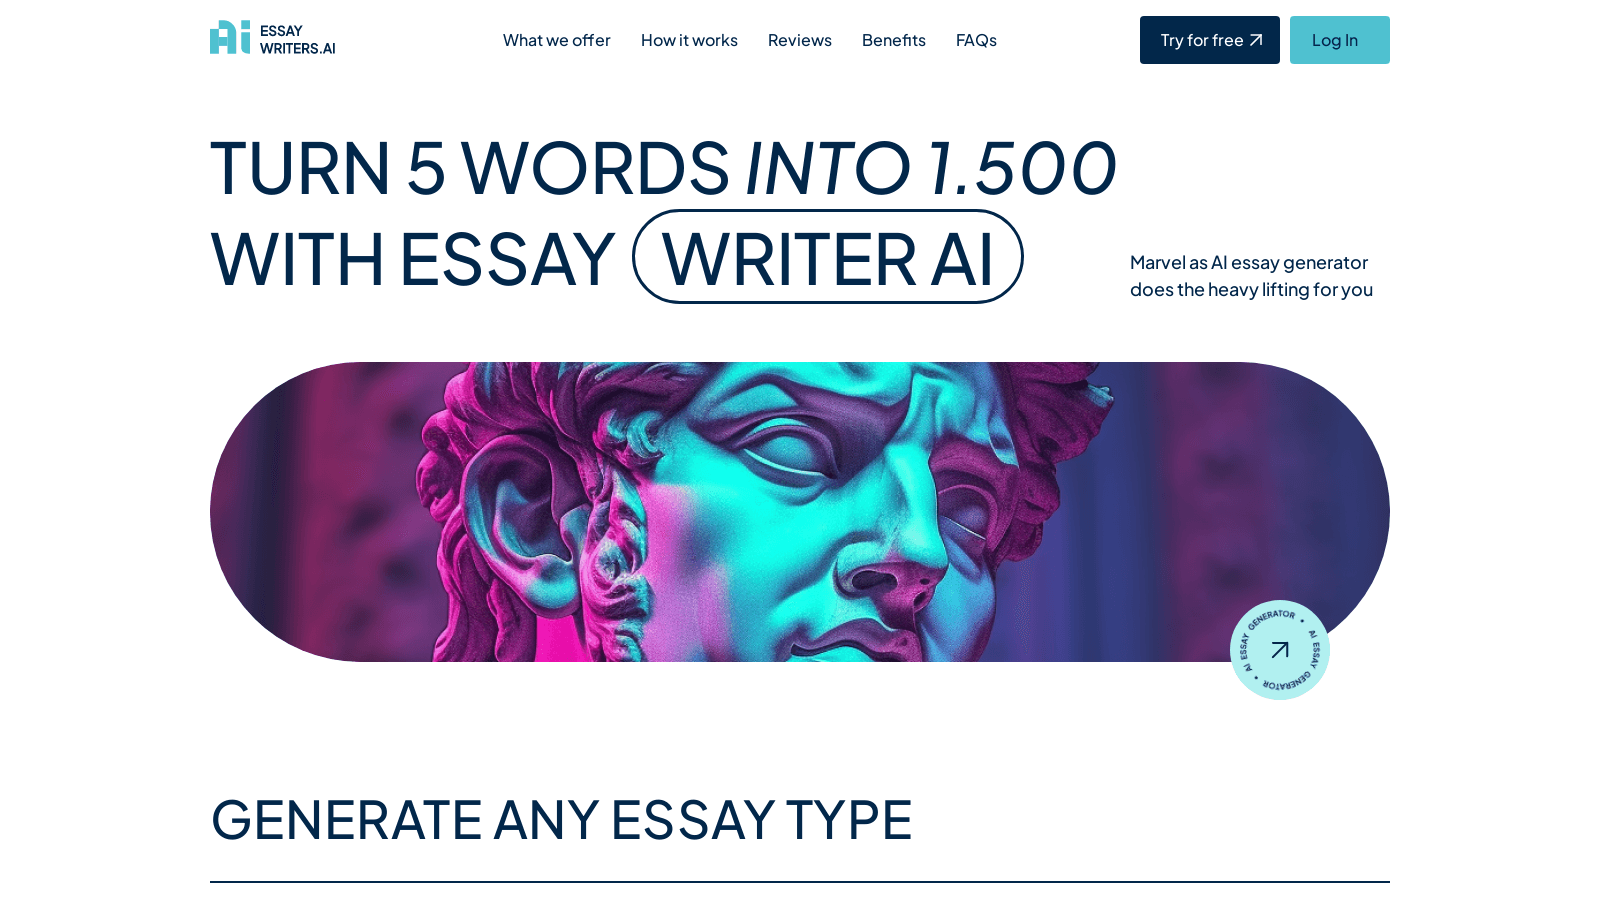 essaywriters.ai